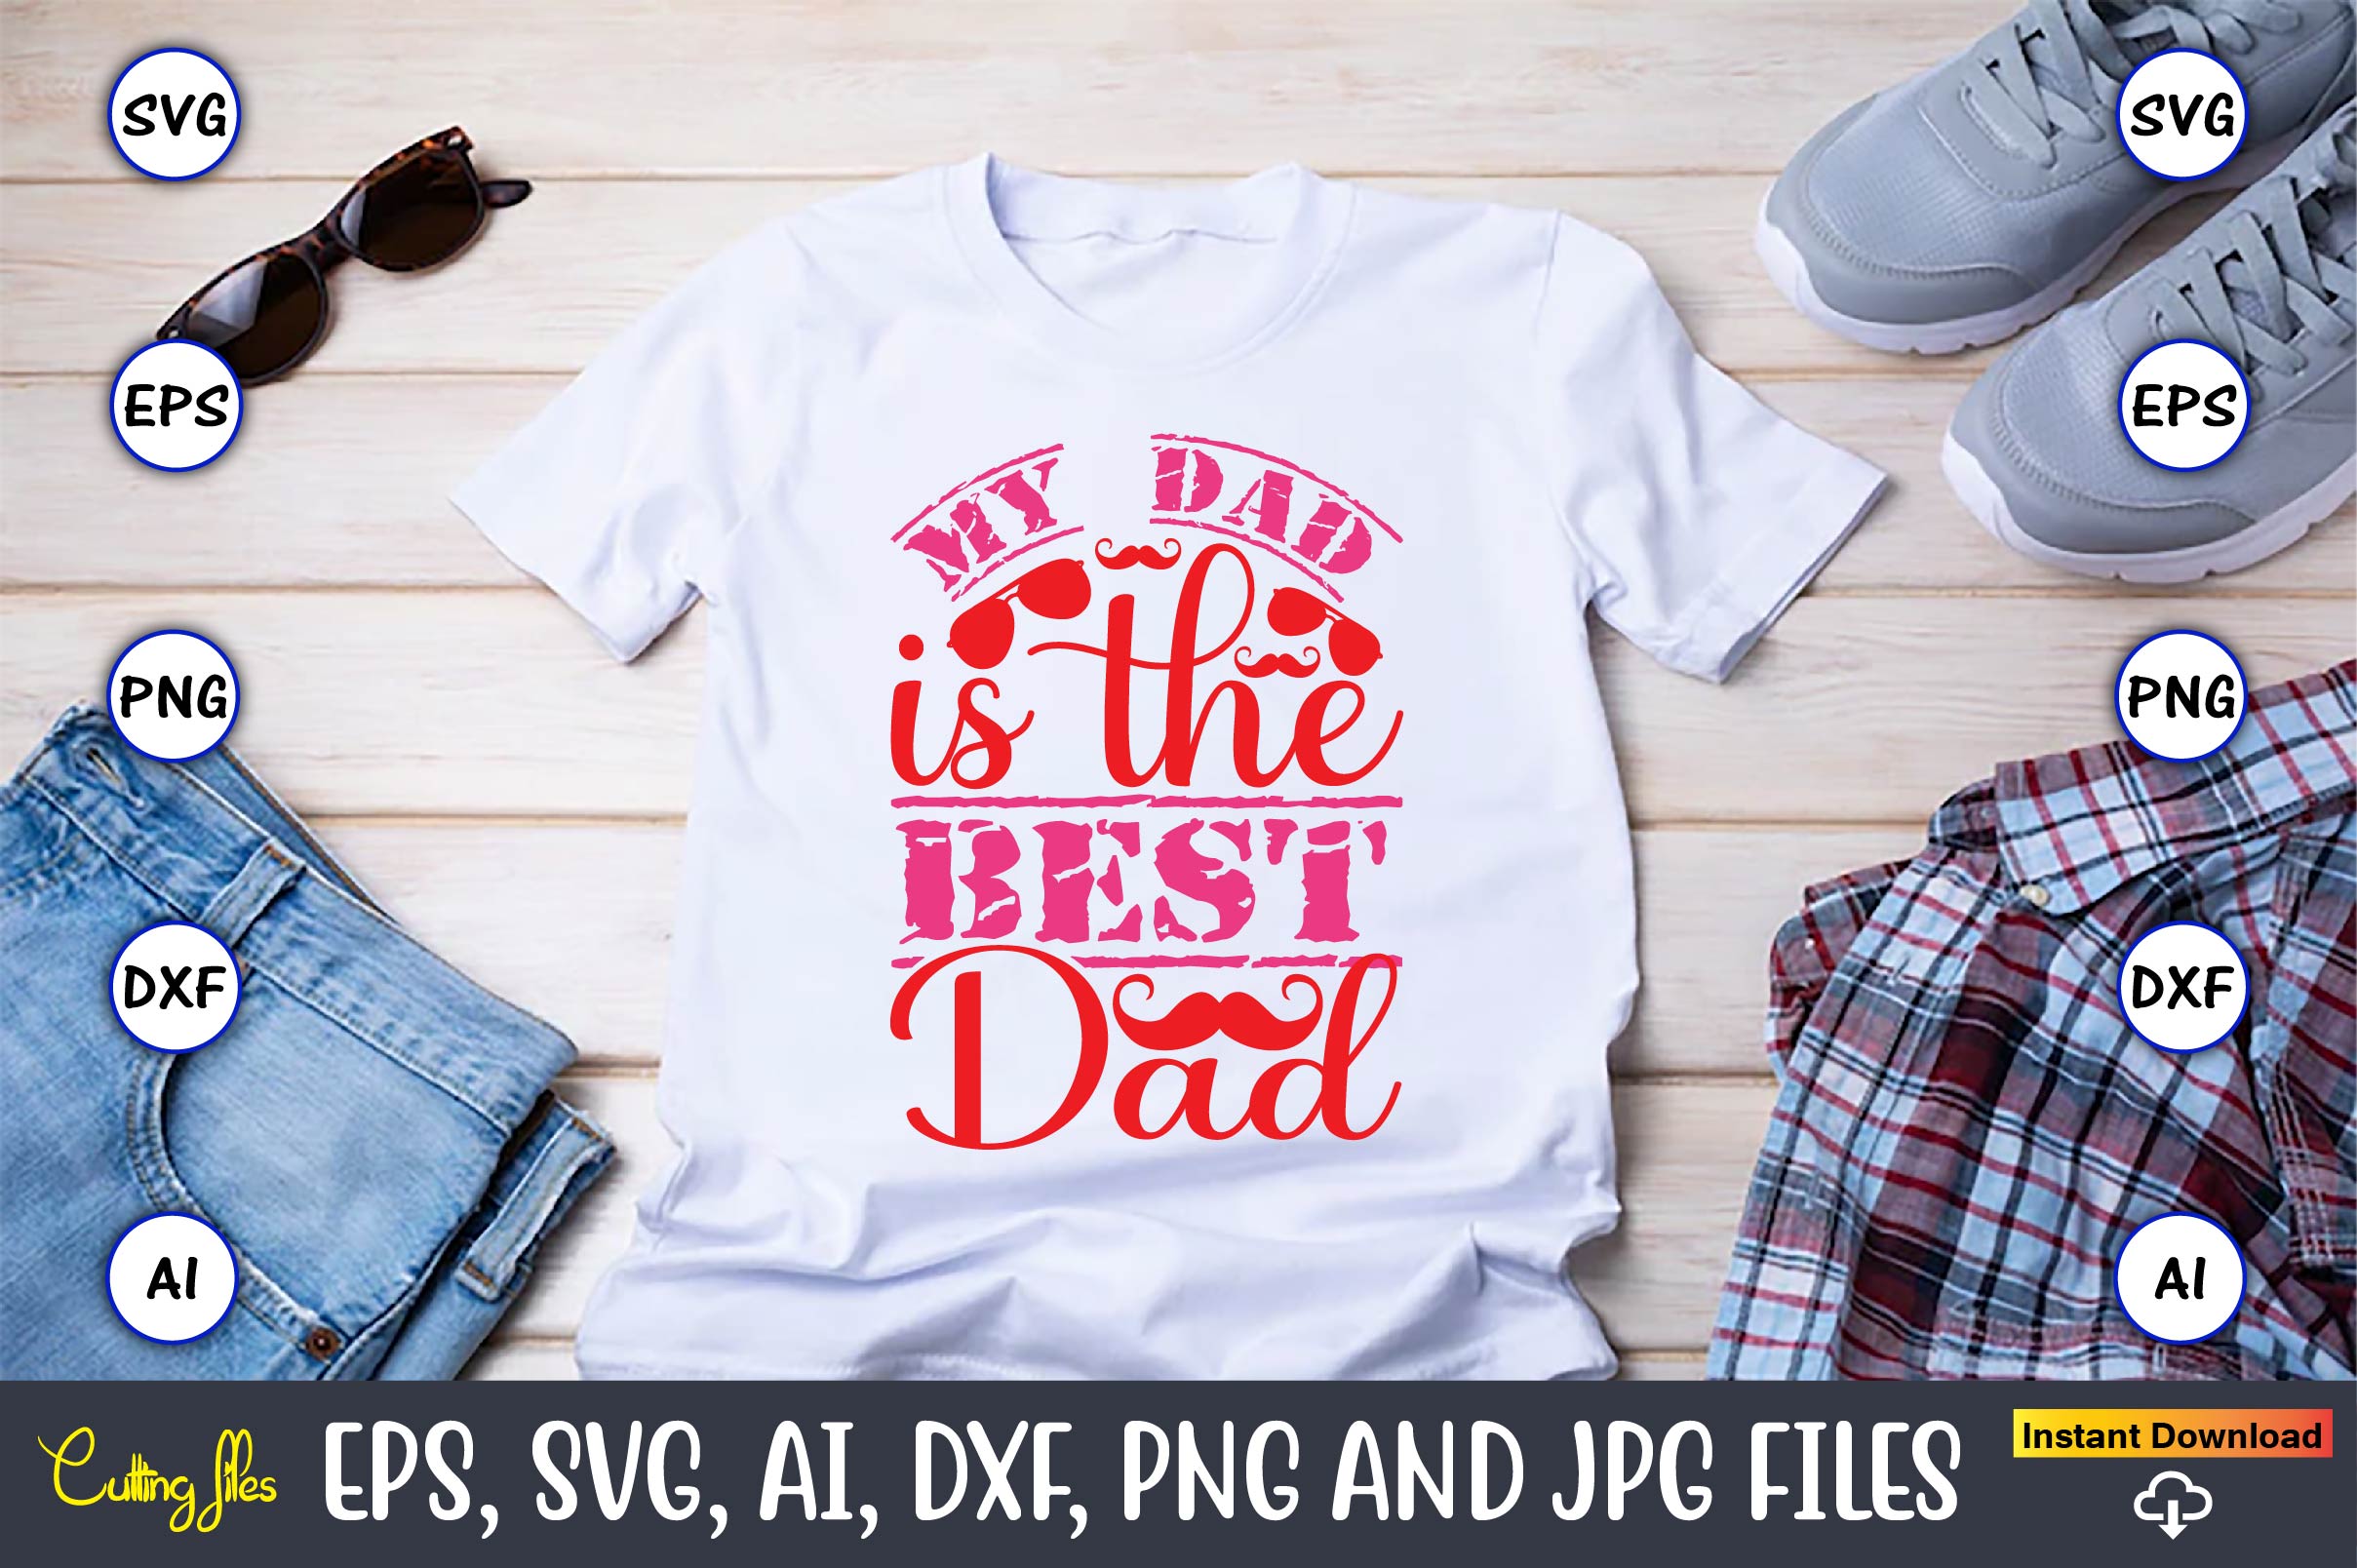 Buy Yankee Dad Shirt Online In India -  India